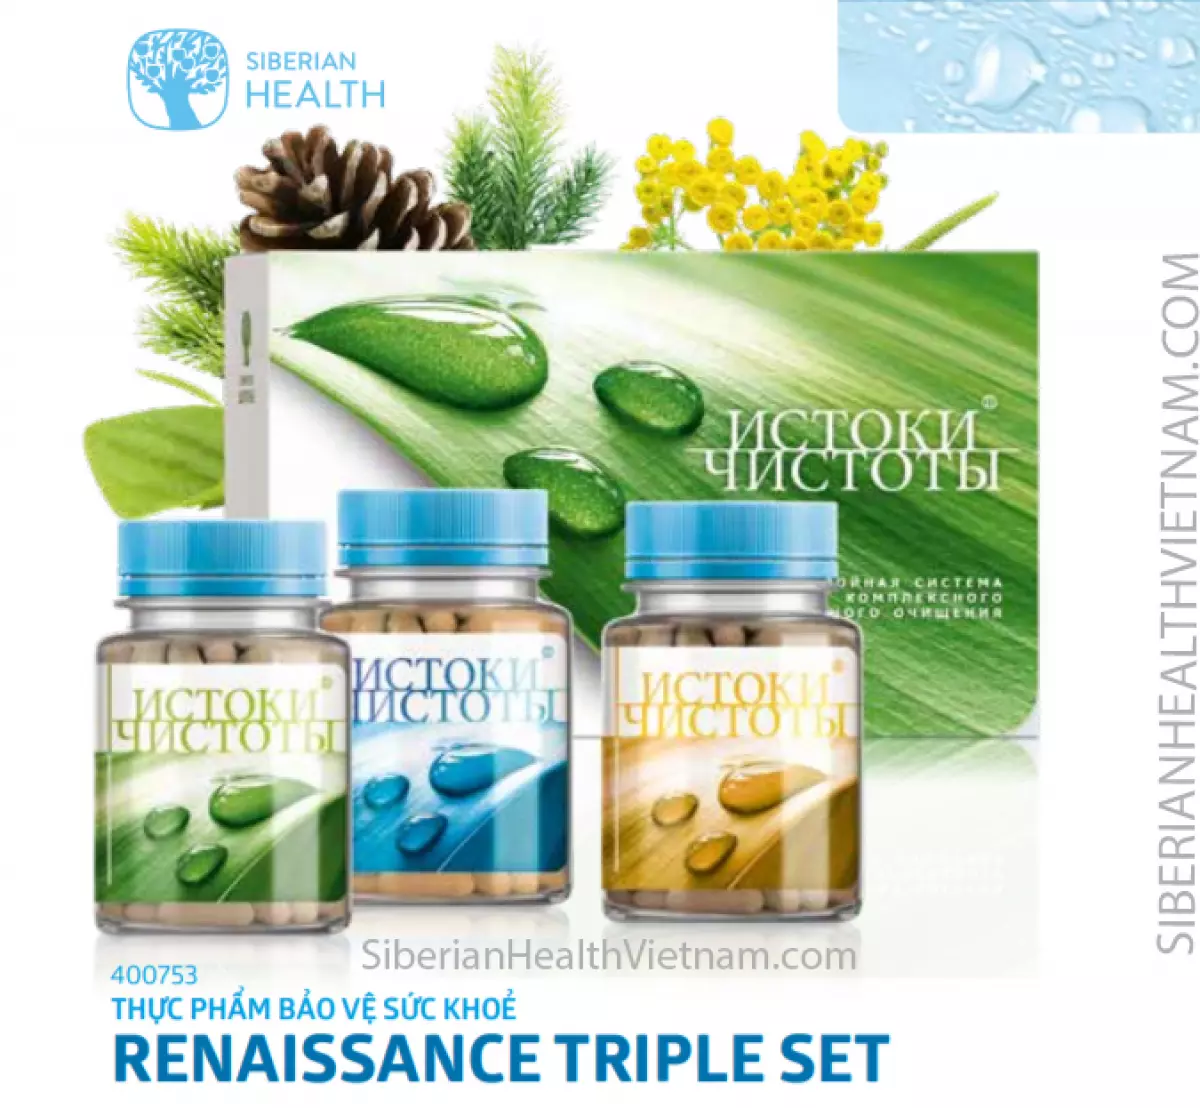 Renaissance Triple Set - Siberian Health